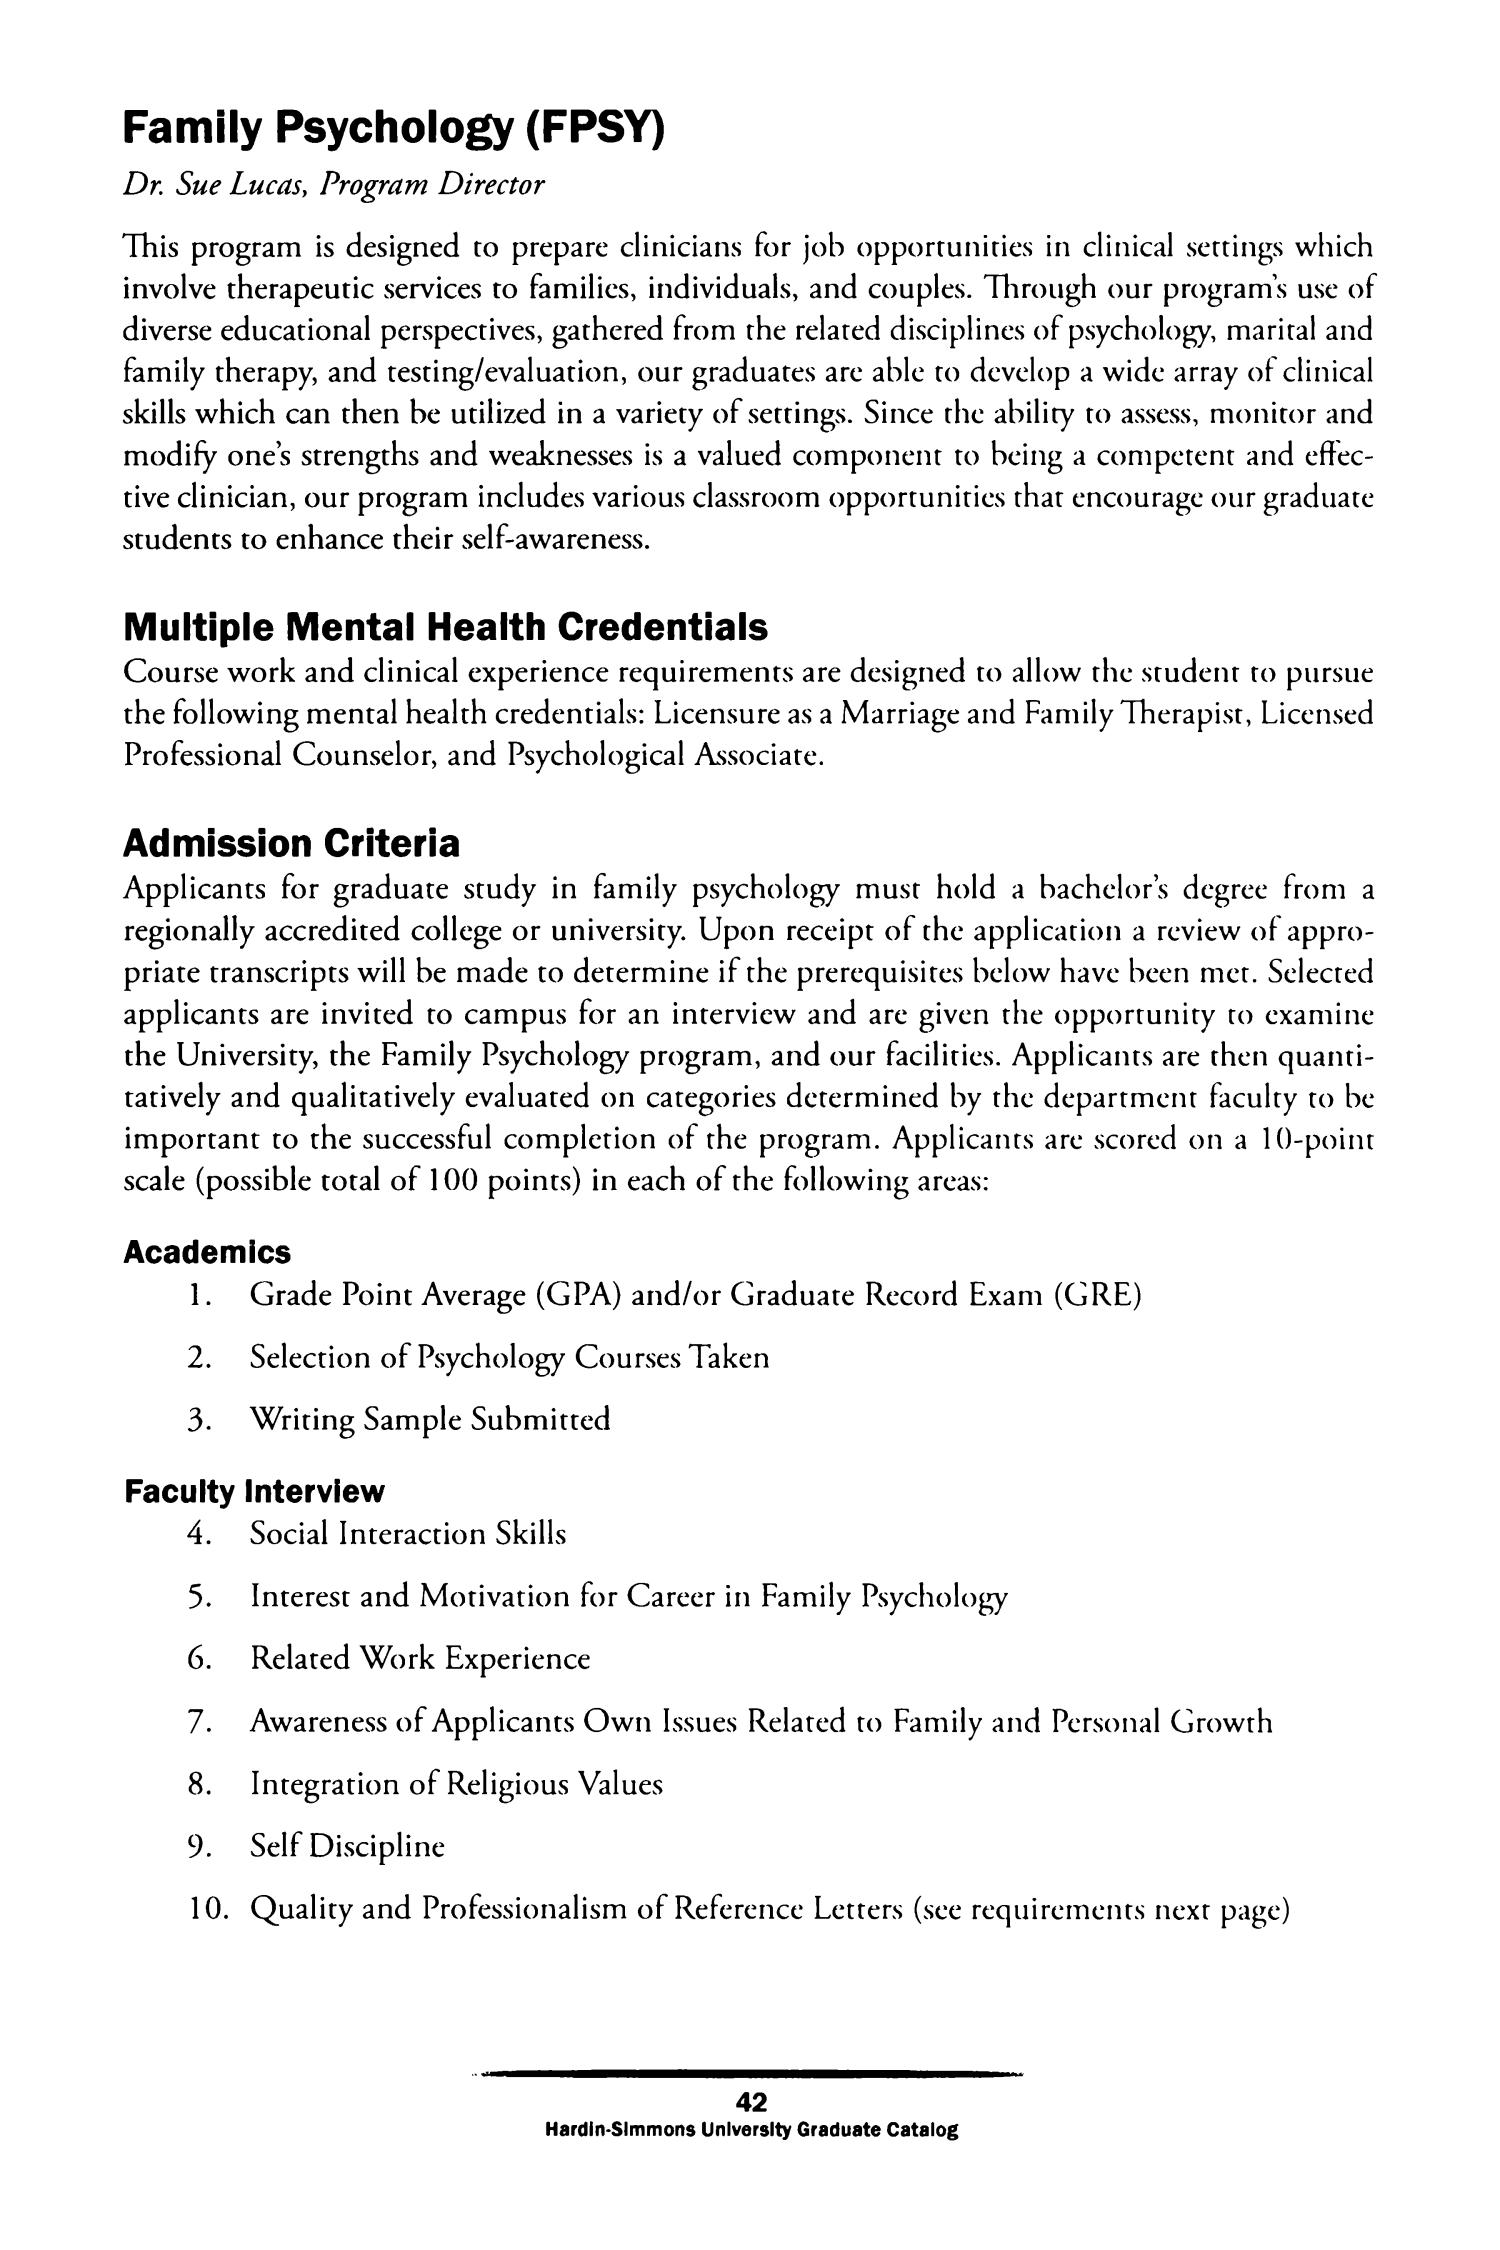 Catalog of Hardin-Simmons University, 2008-2009 Graduate Bulletin
                                                
                                                    42
                                                